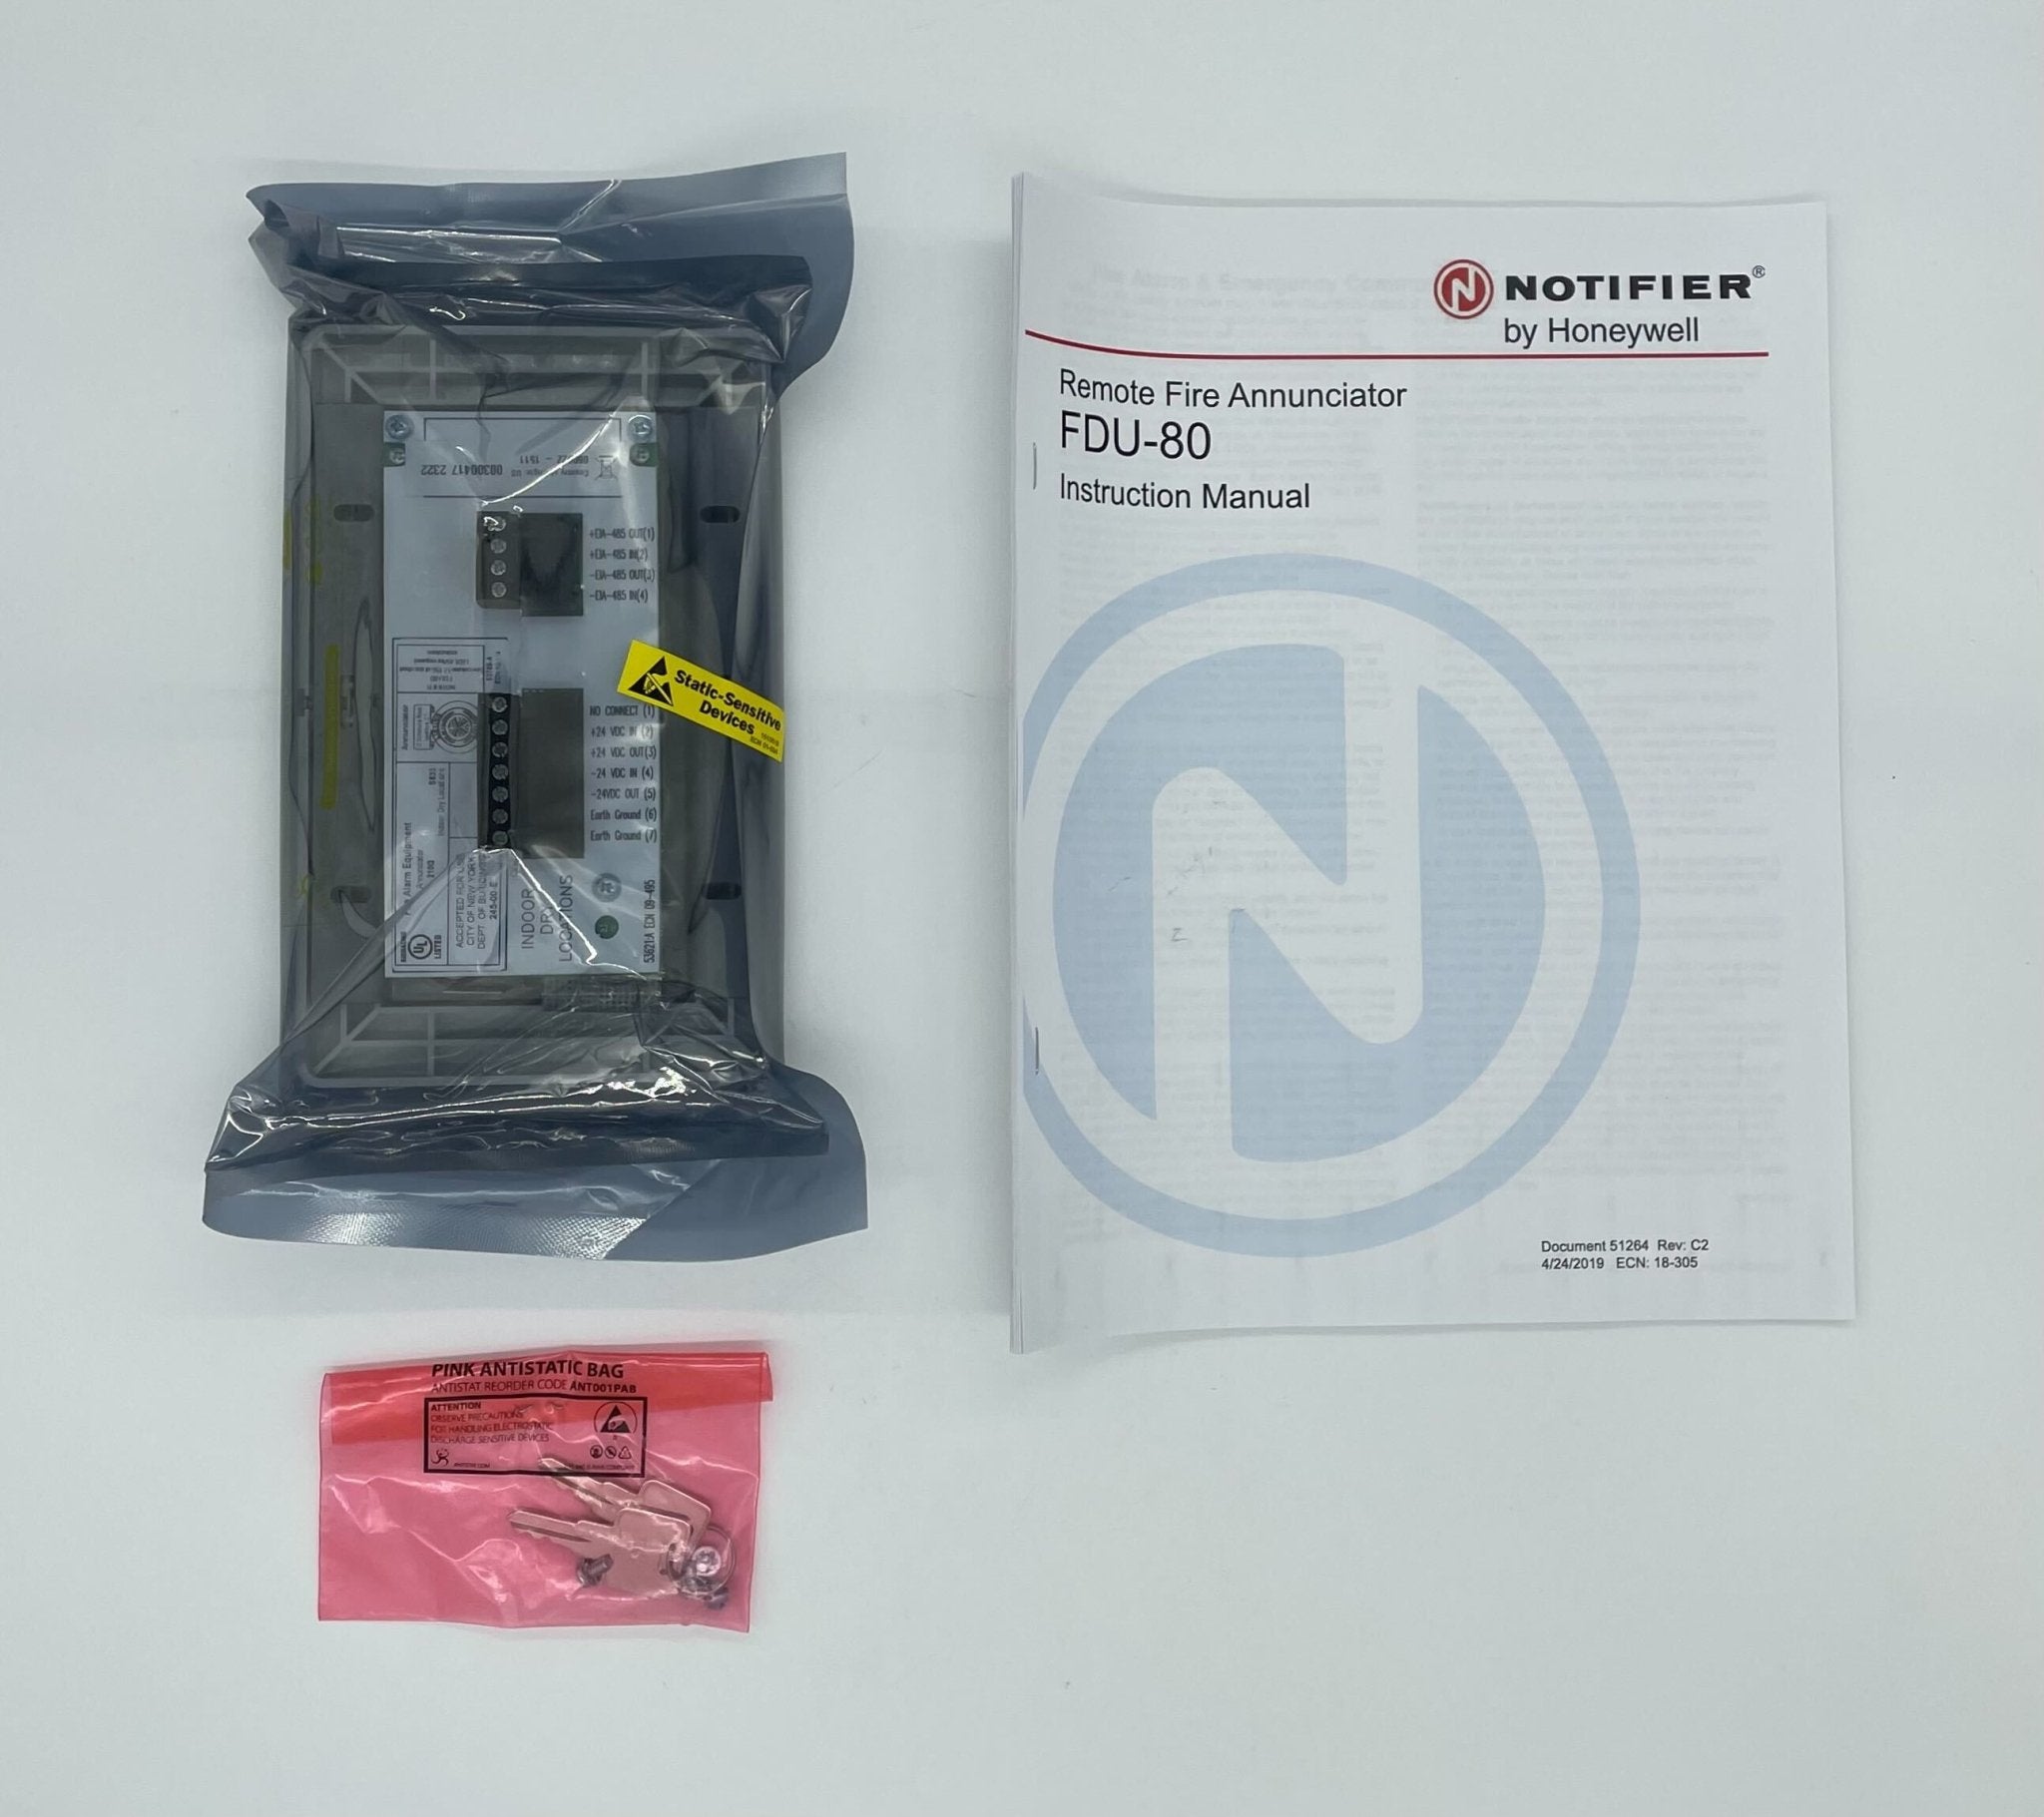 Notifier FDU-80 - The Fire Alarm Supplier